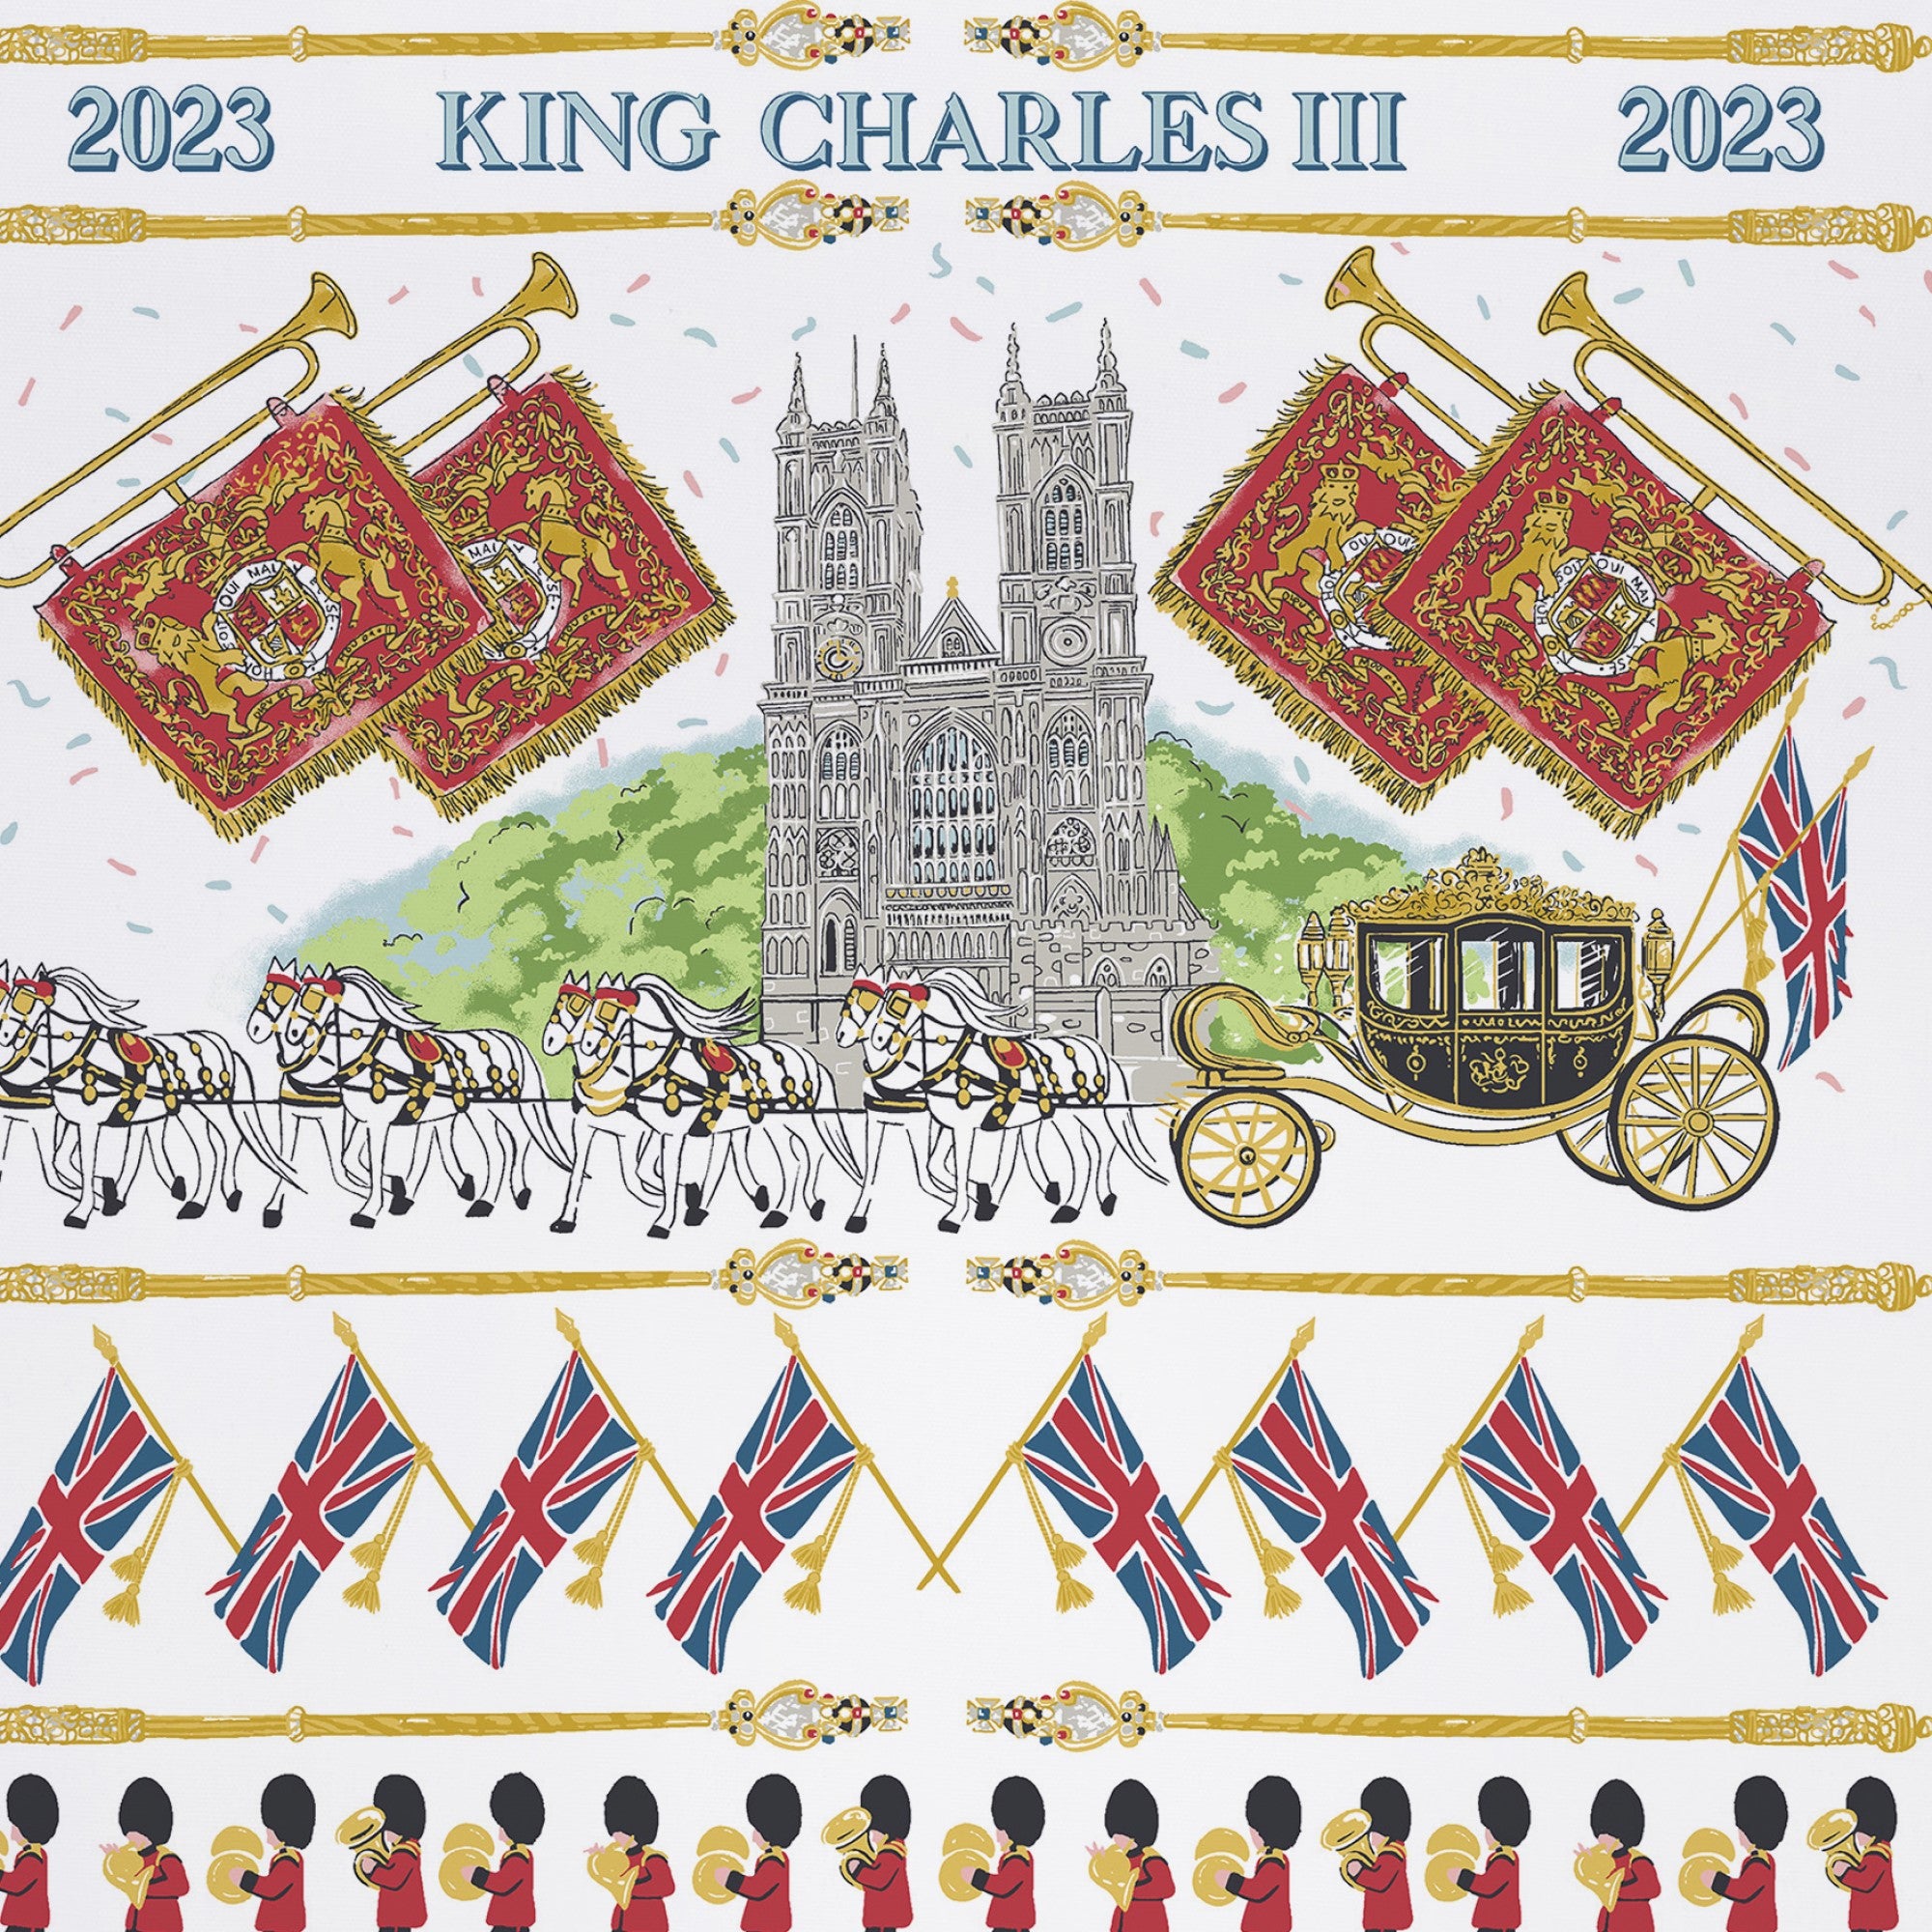 Ulster Weavers Commemorative 100% Cotton Tea Towel - King Charles III 2023 Celebration - Tea Towel - Ulster Weavers